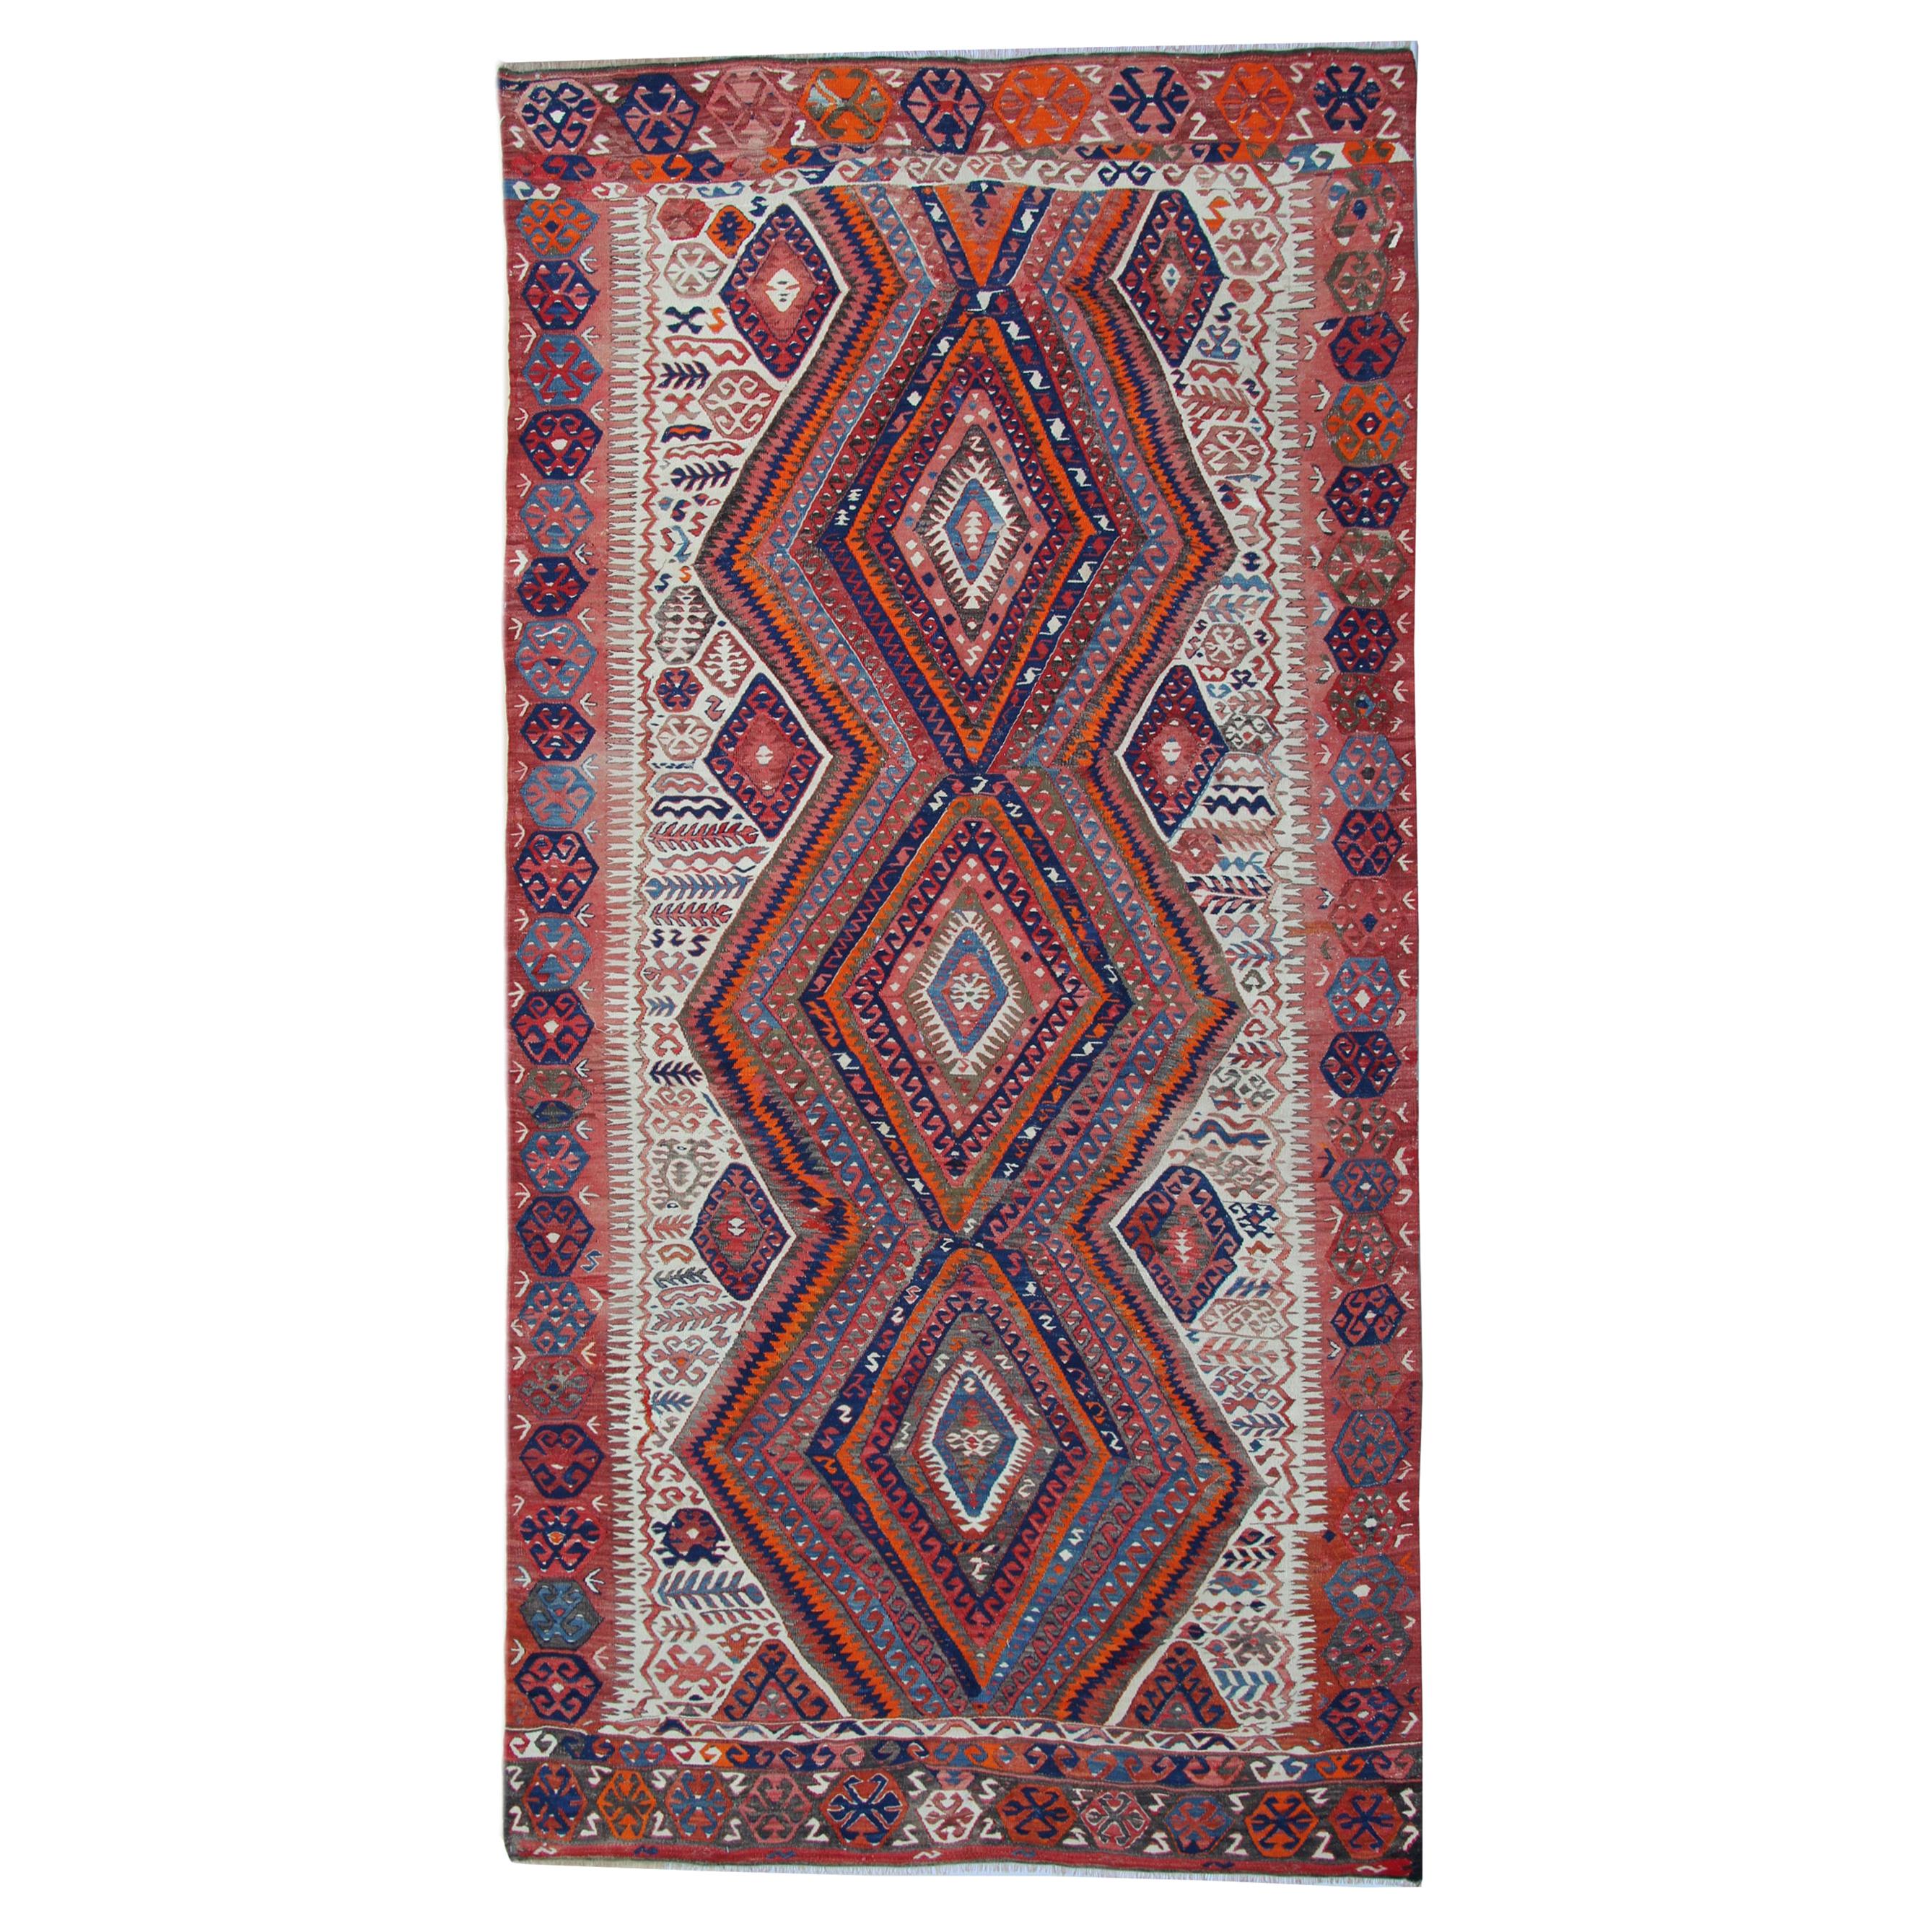 Antique Rugs Turkish Handmade Carpet, Kilim Rugs, Oriental Rugs